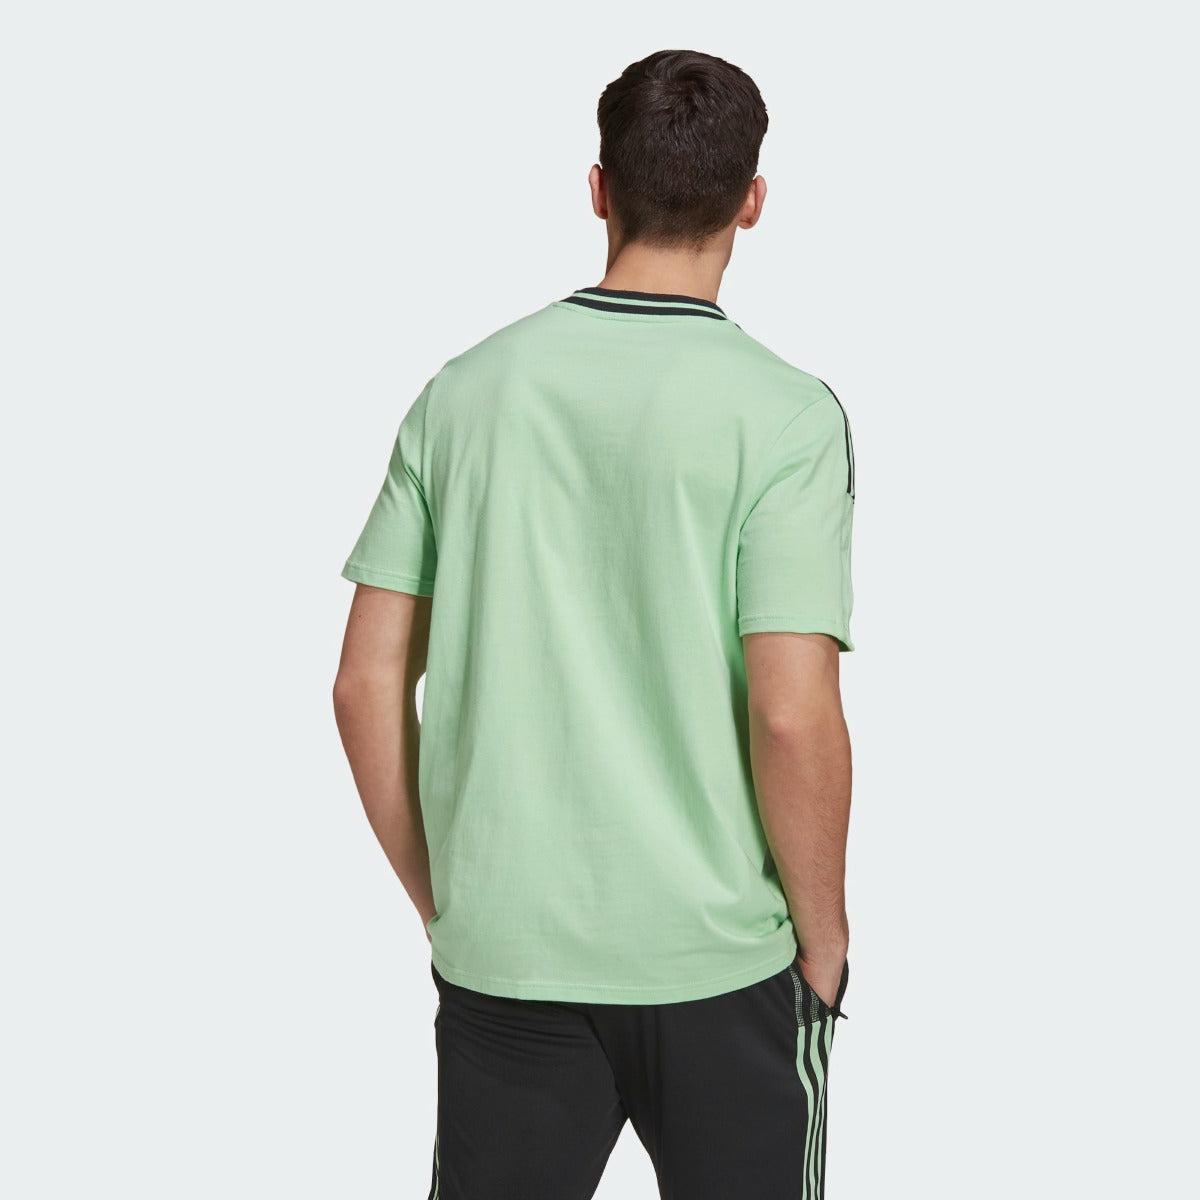 Adidas 2021 Manchester United Tee Shirt - Glory Mint (Model - Back)